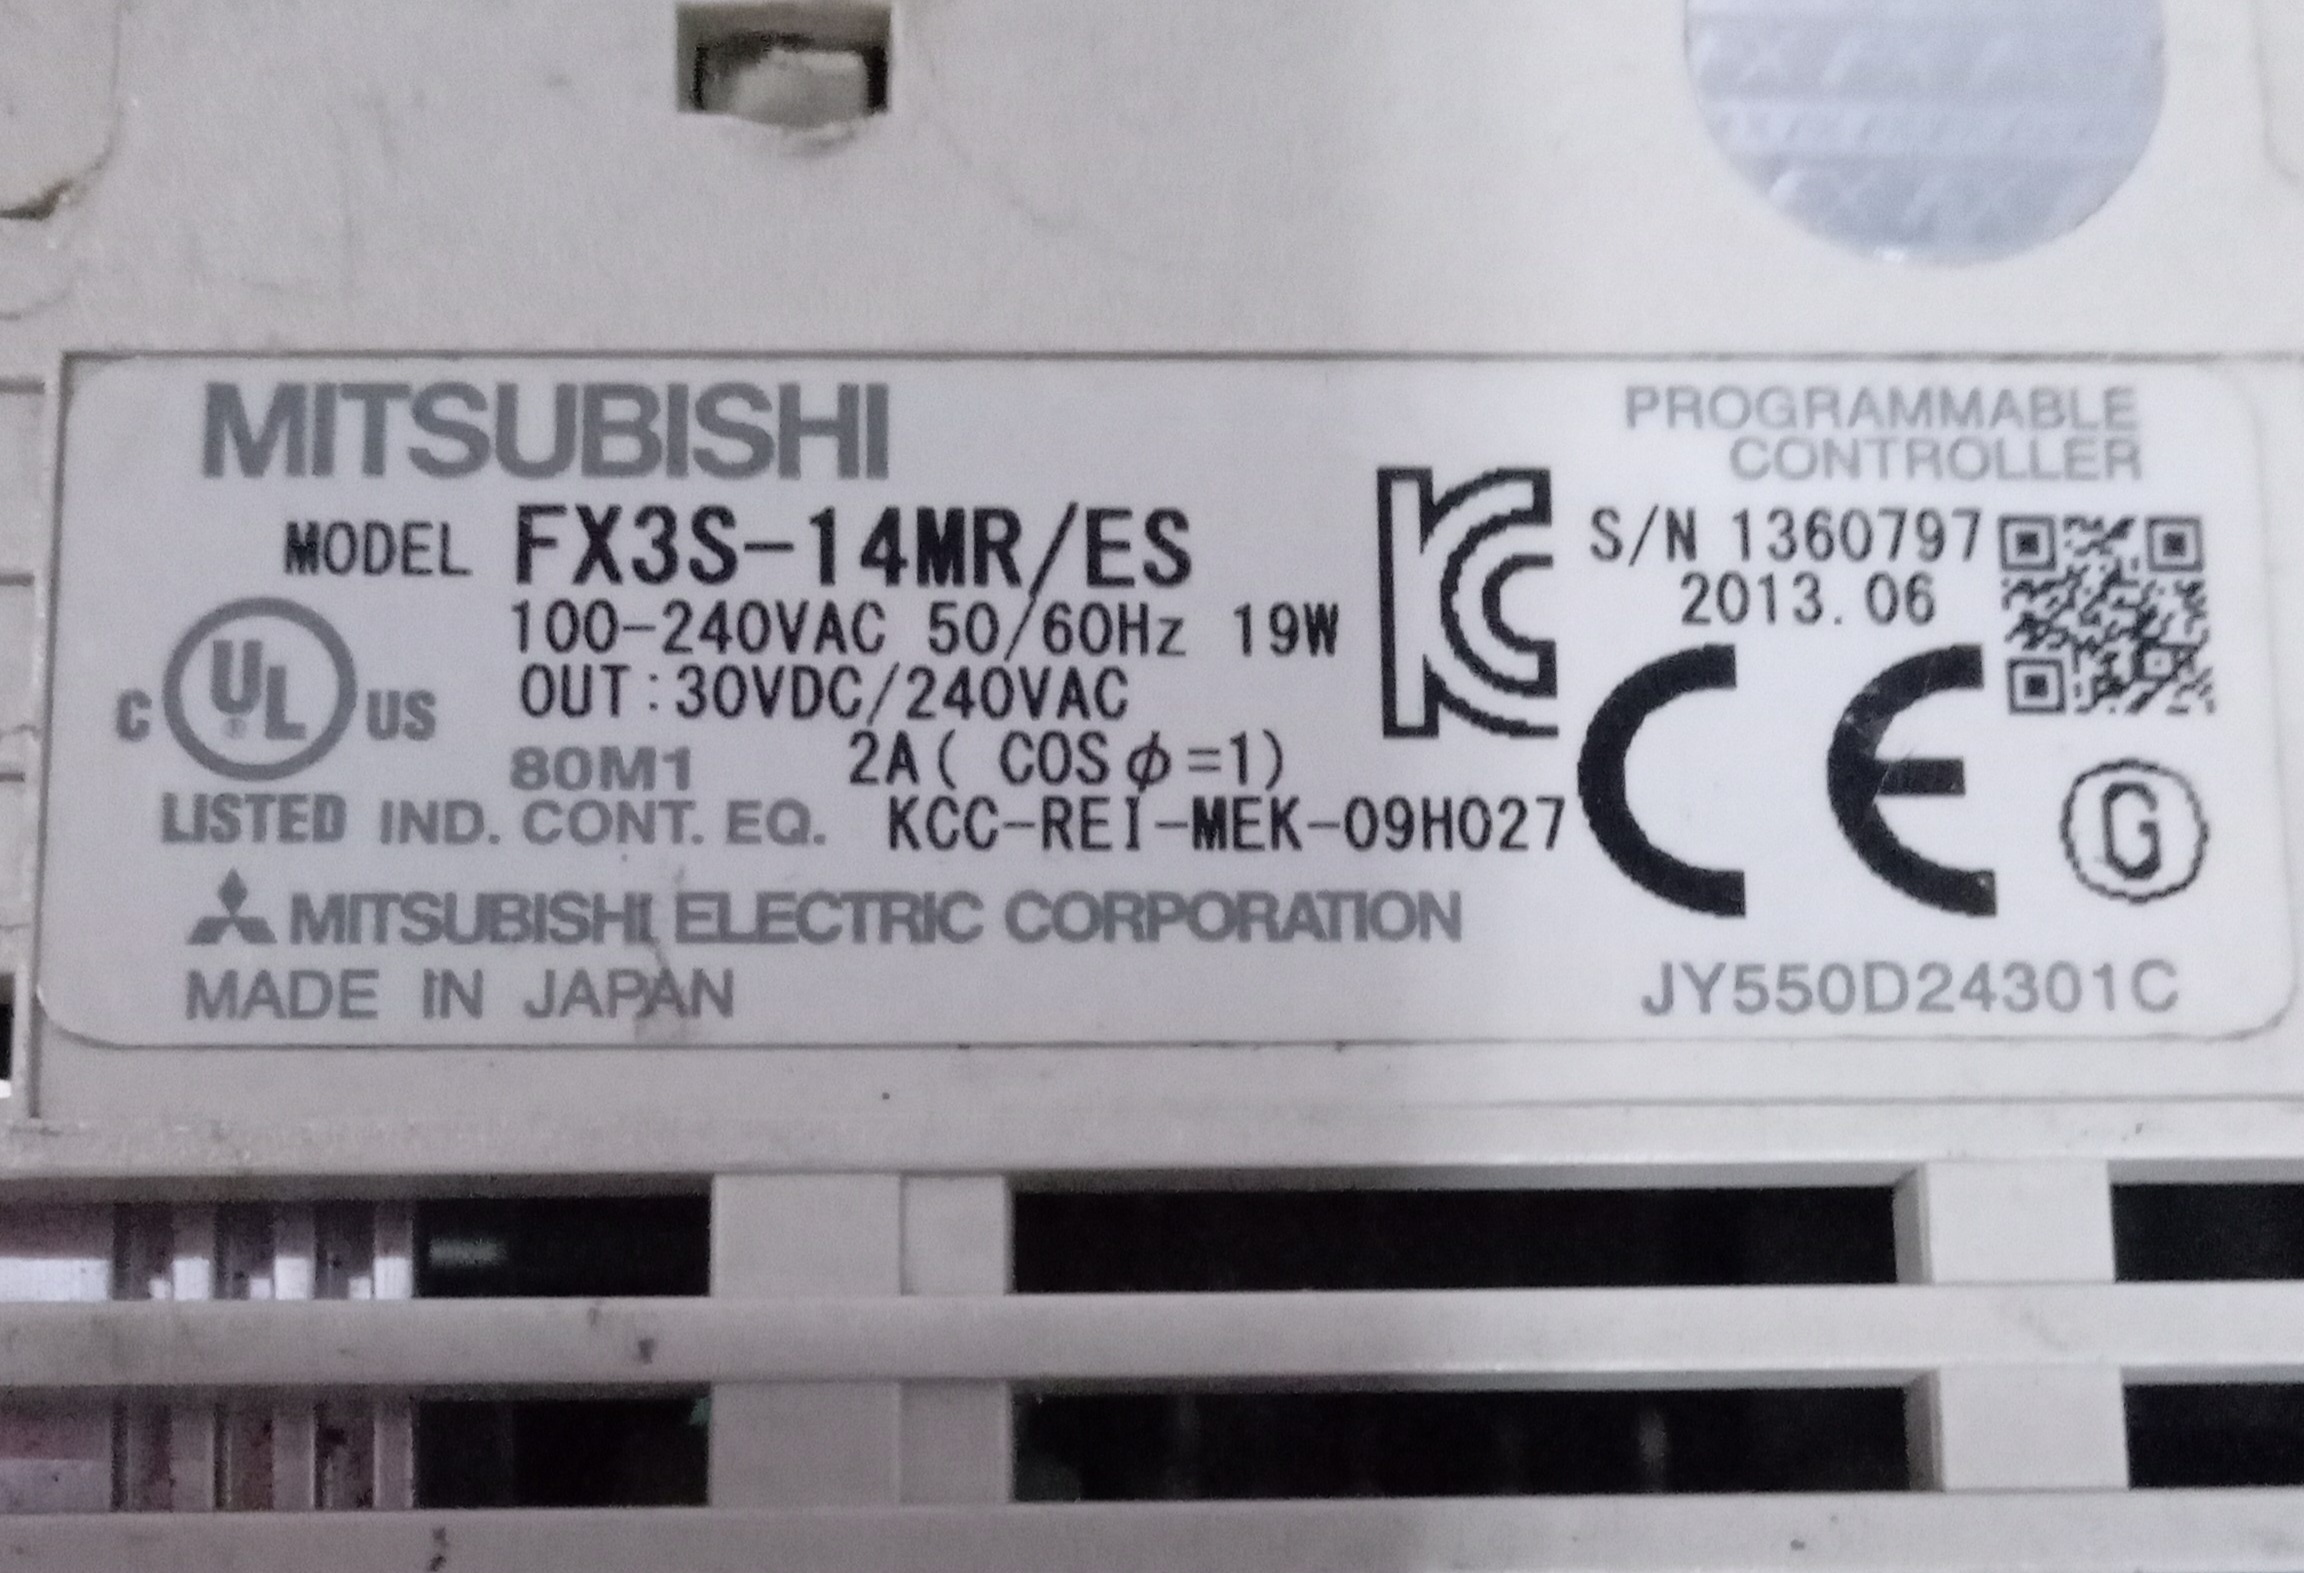 MITSUBISHI PROGRAMMABLE CONTROLLER FX3S-14MR/ES